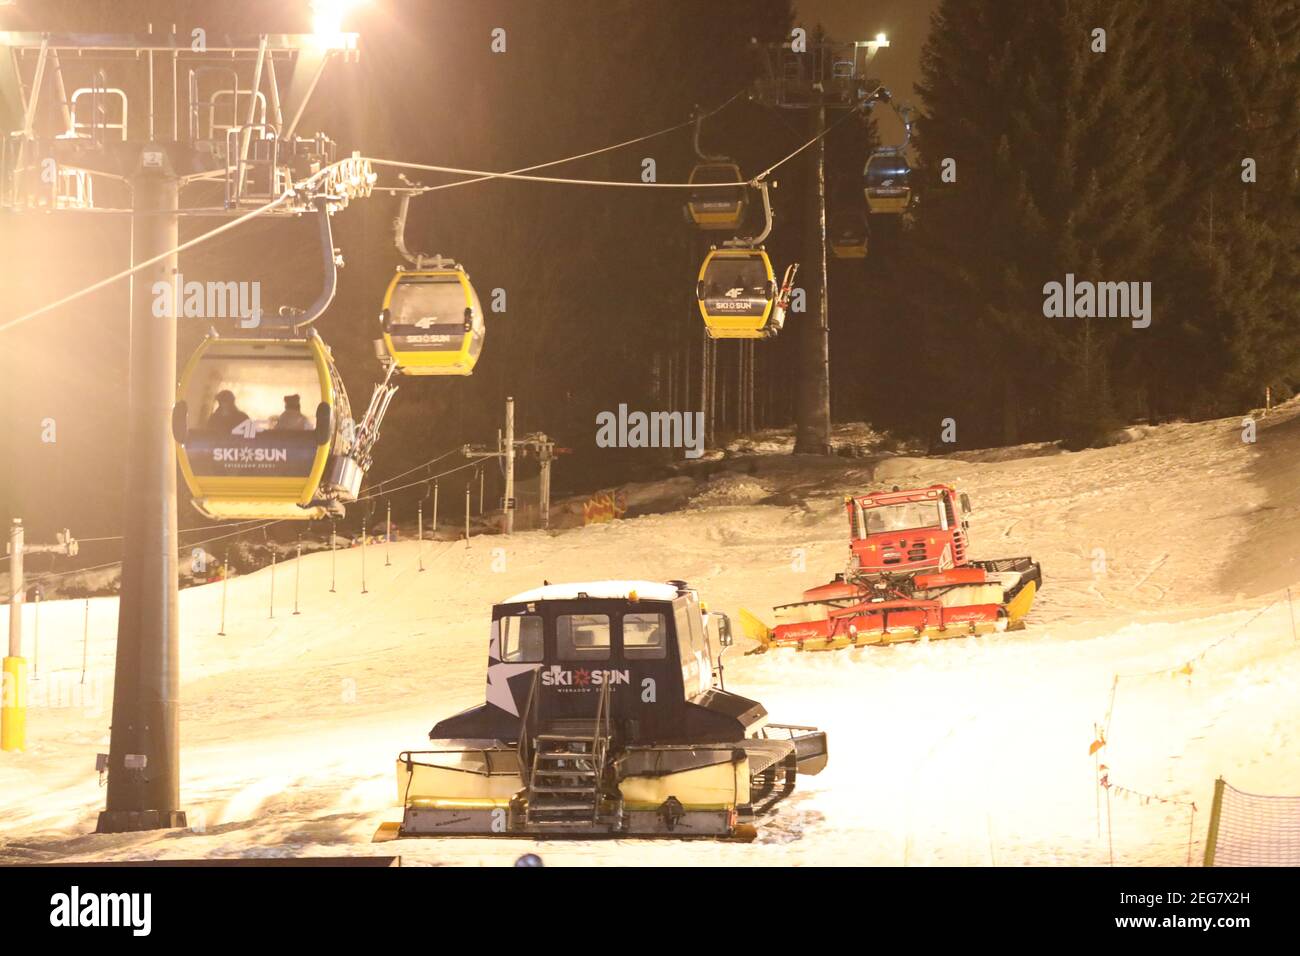 Trotz Corona: Polen öffnet Skigebiete - Ansturm auf Wintersportorte folgt prompt, Swieradow Zdroj (Bad Flinsberg) Polen,17.02.2021 Stock Photo